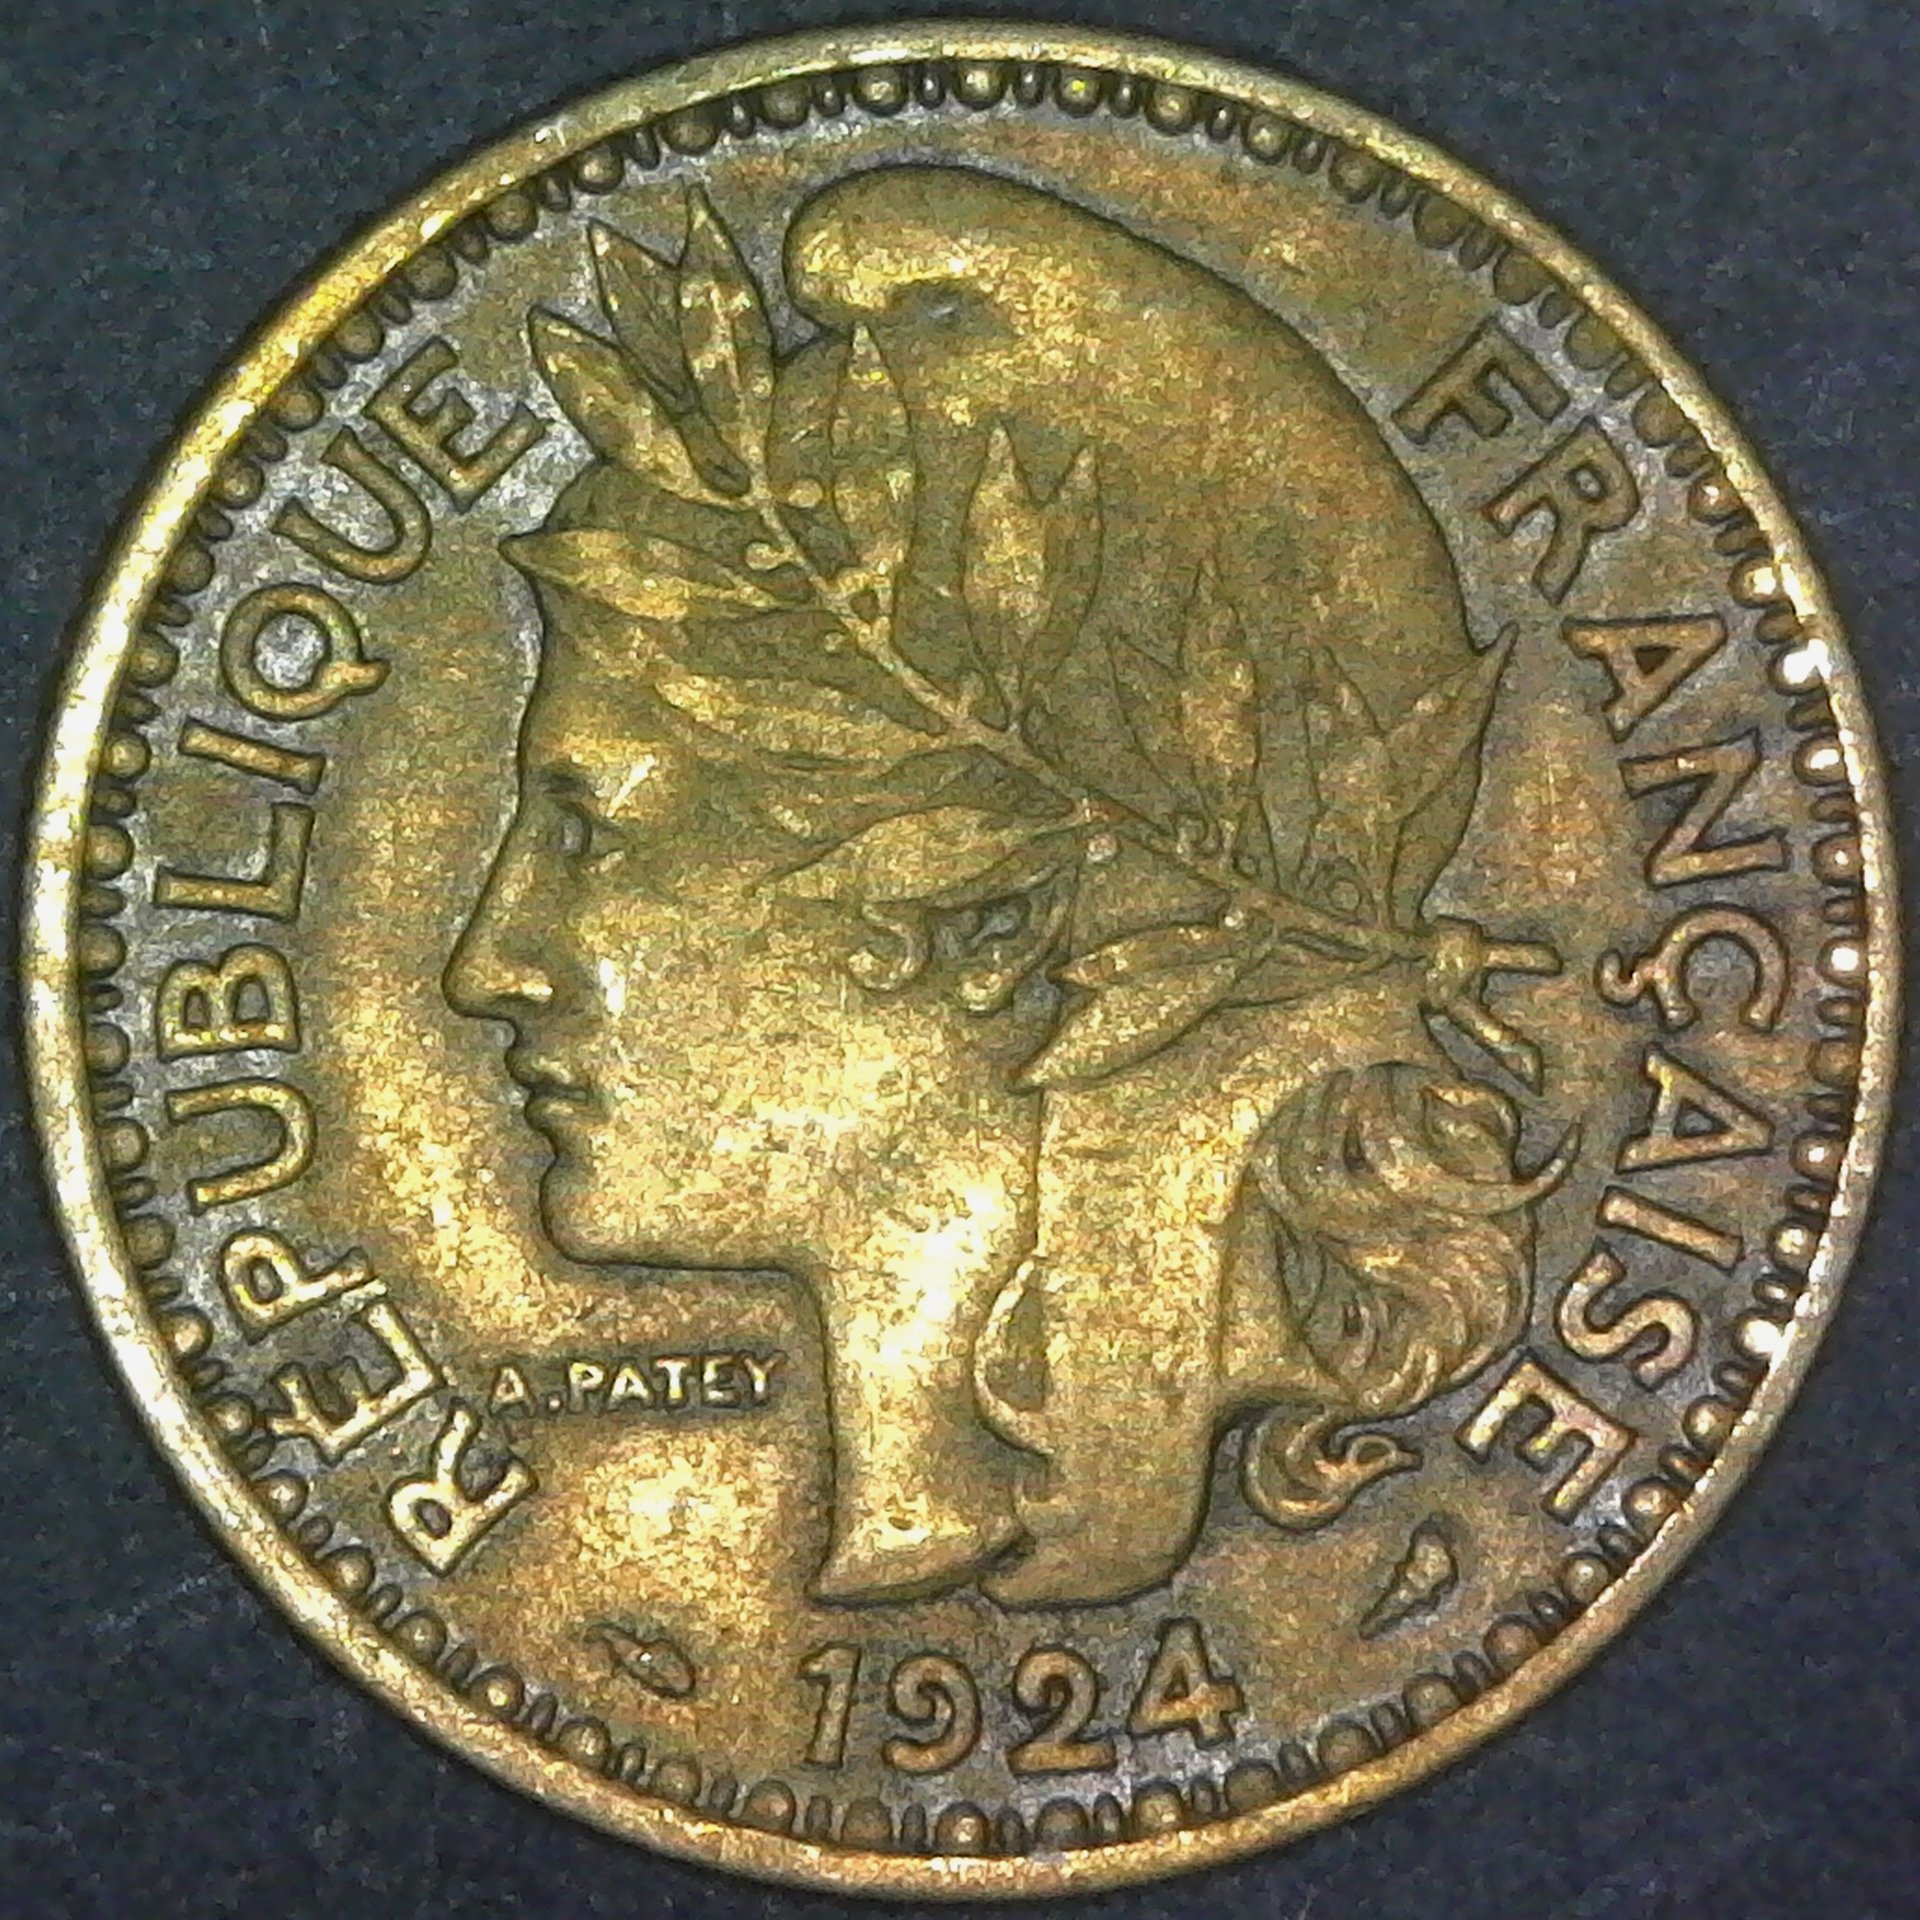 Cameroon 2 Francs 1924 reverse.jpg